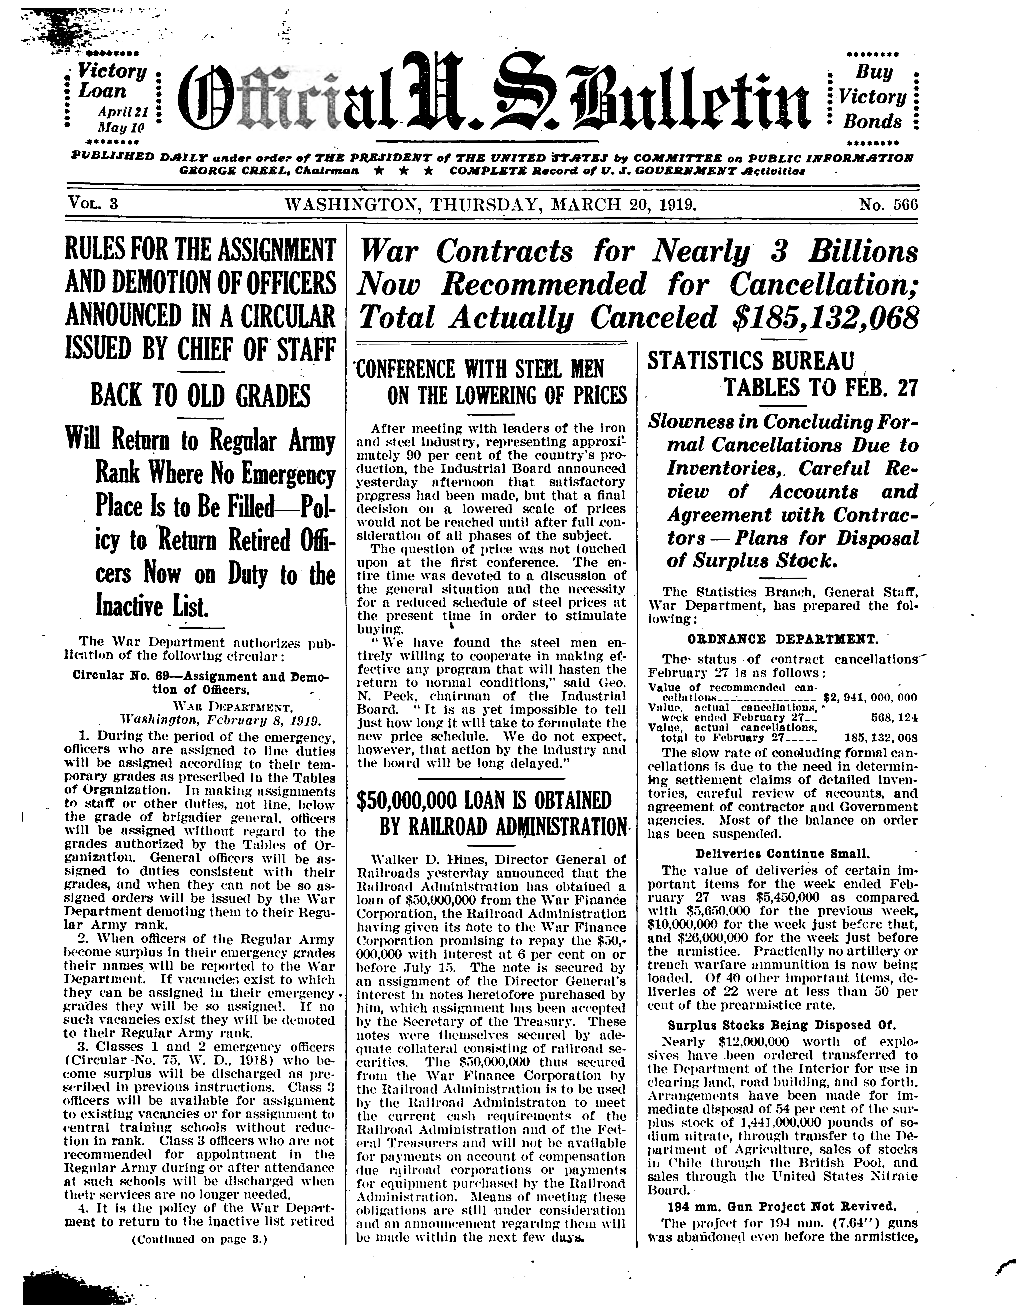 Official U. S. Bulletin: Thursday, March 20, 1919